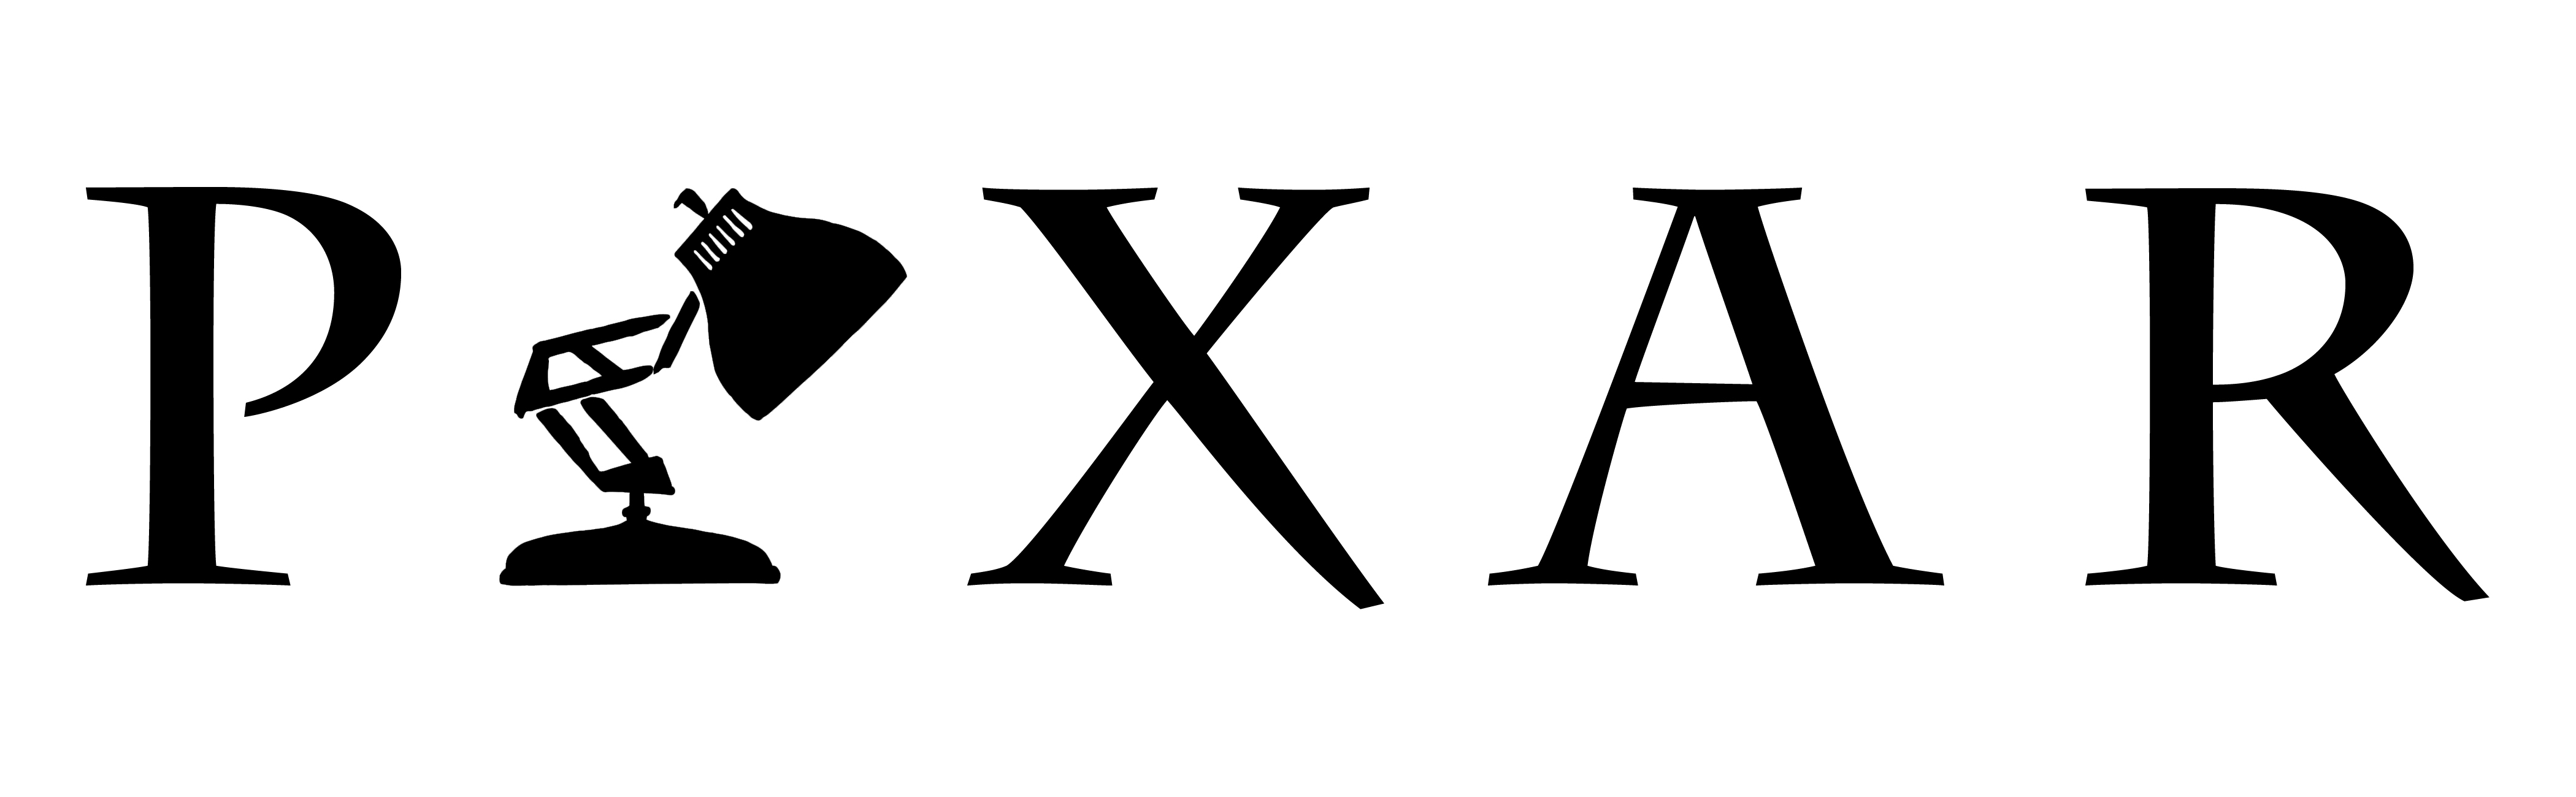 Pixar Logo And Symbol, Meaning, History, Png - Pixar, Transparent background PNG HD thumbnail